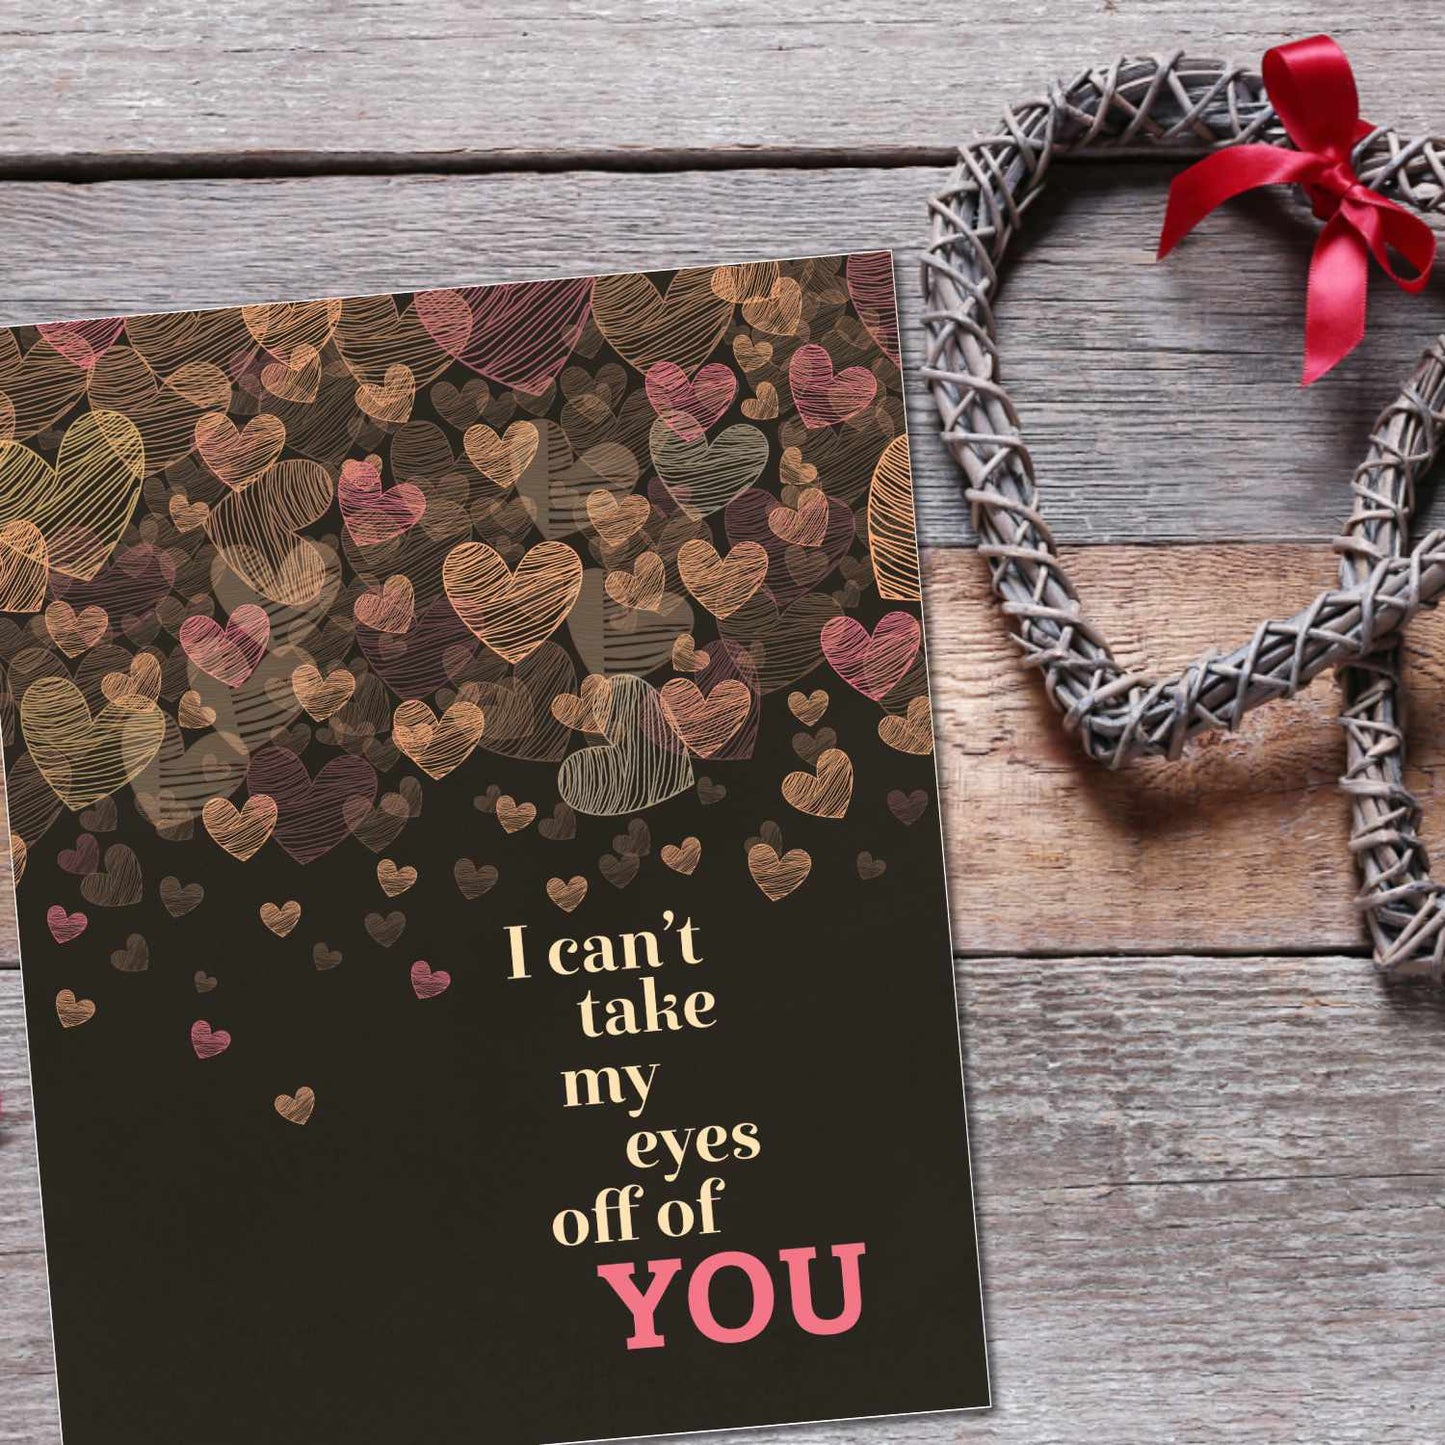 Can't Take My Eyes off You by Frankie Valli - 60s Love Song Song Lyrics Art Song Lyrics Art 8x10 Unframed Print 